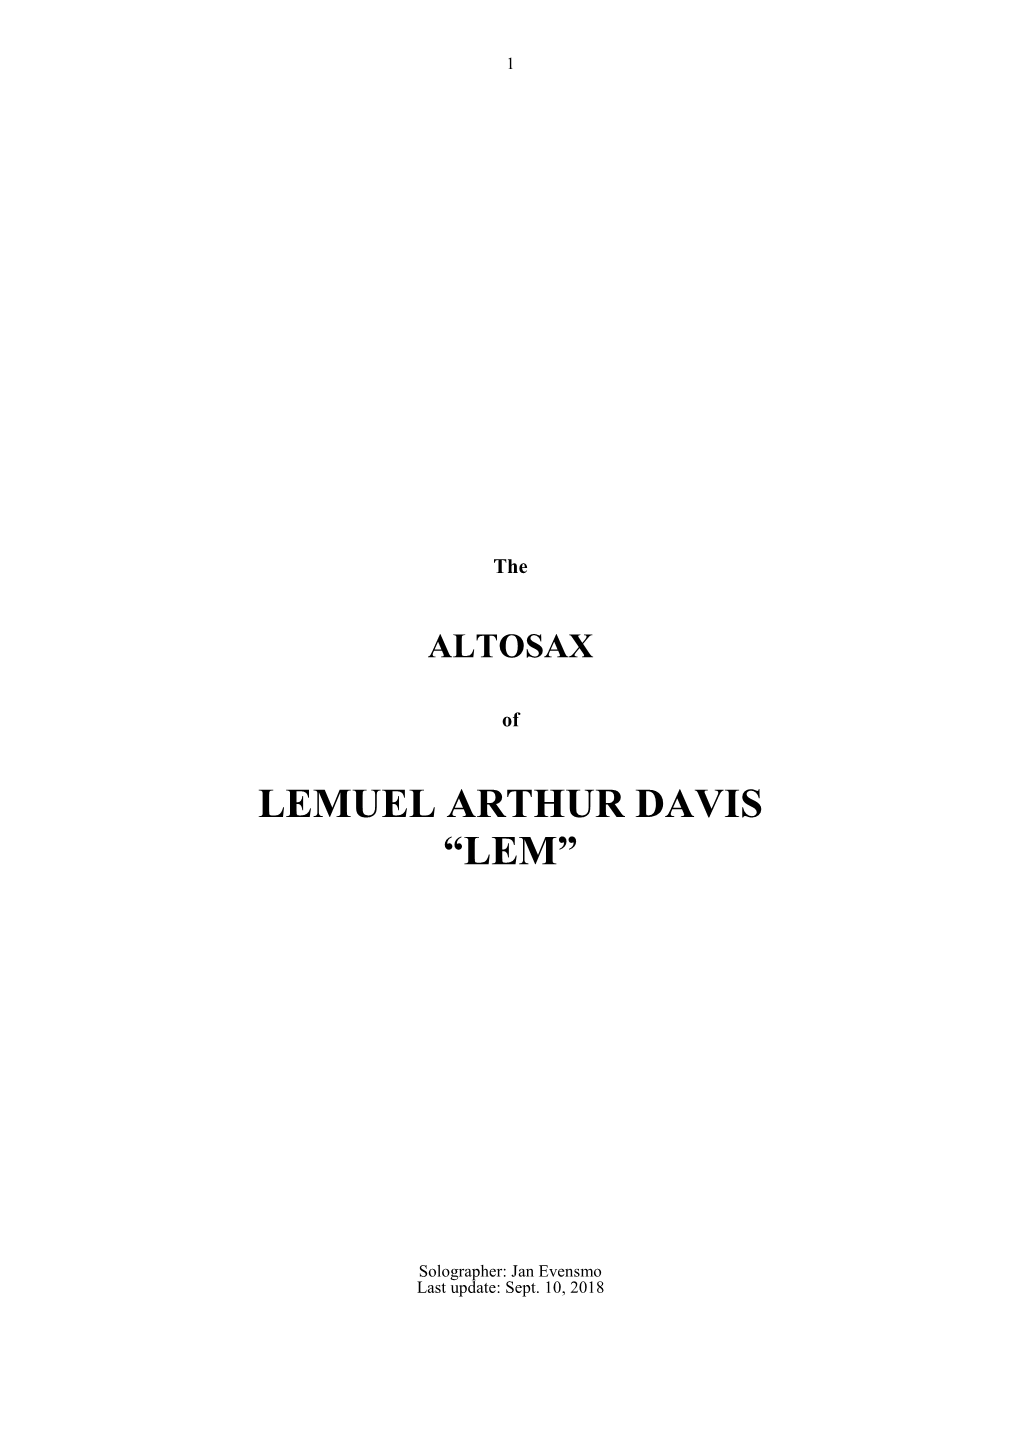 Download the Alto Saxophone of Lem Davis